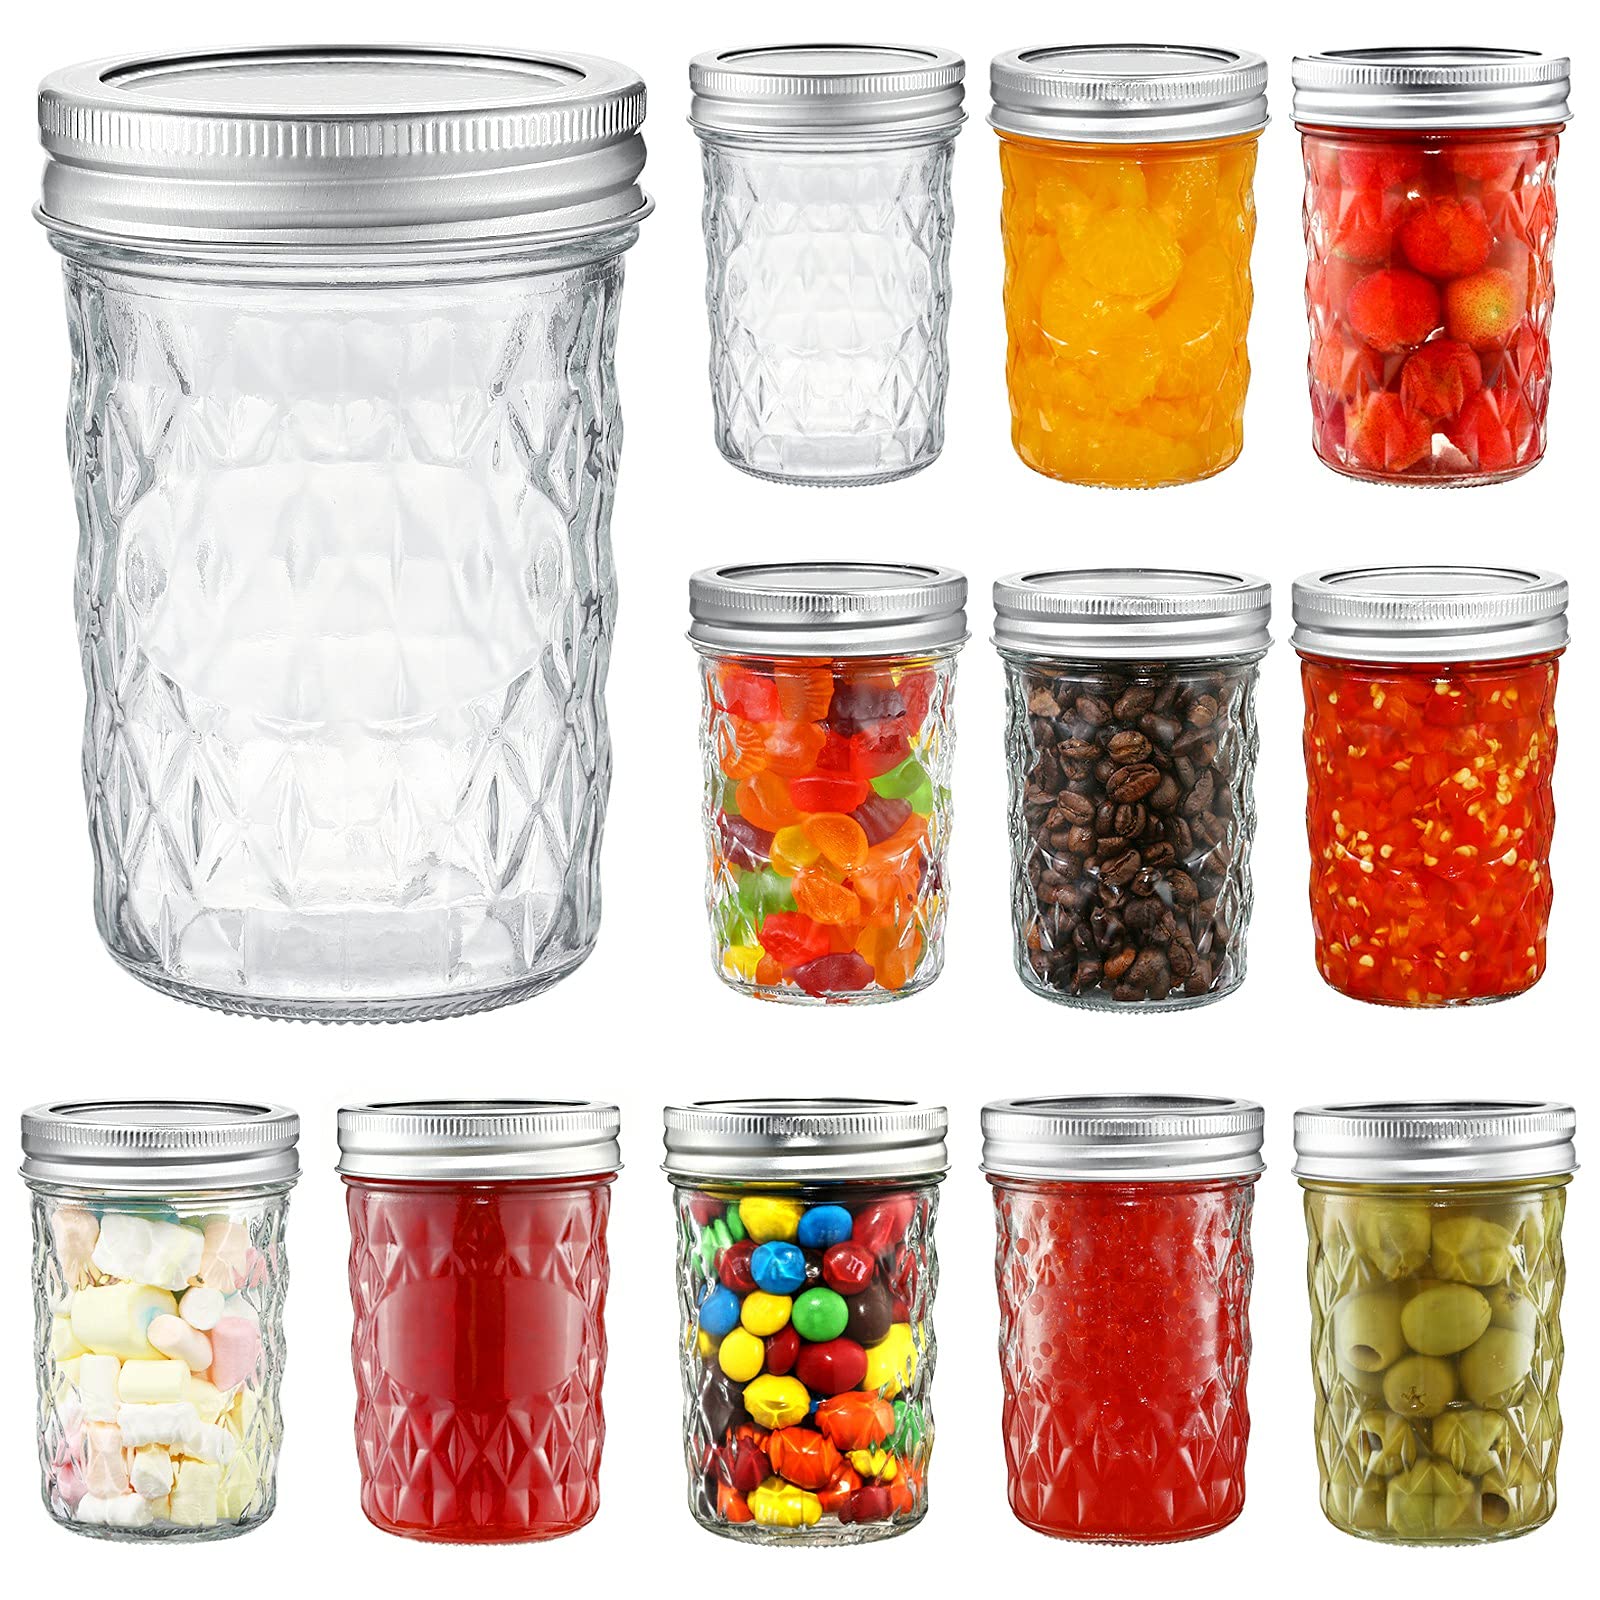 YEBODA 12 Pack Mason Jars 8 oz Glass Jars with Lids and Bands Canning Jars Ideal for Preserving, Jam, Honey, Jelly, Wedding Favors, Shower Favors, Sauces, Yogurt, DIY Spice Jars